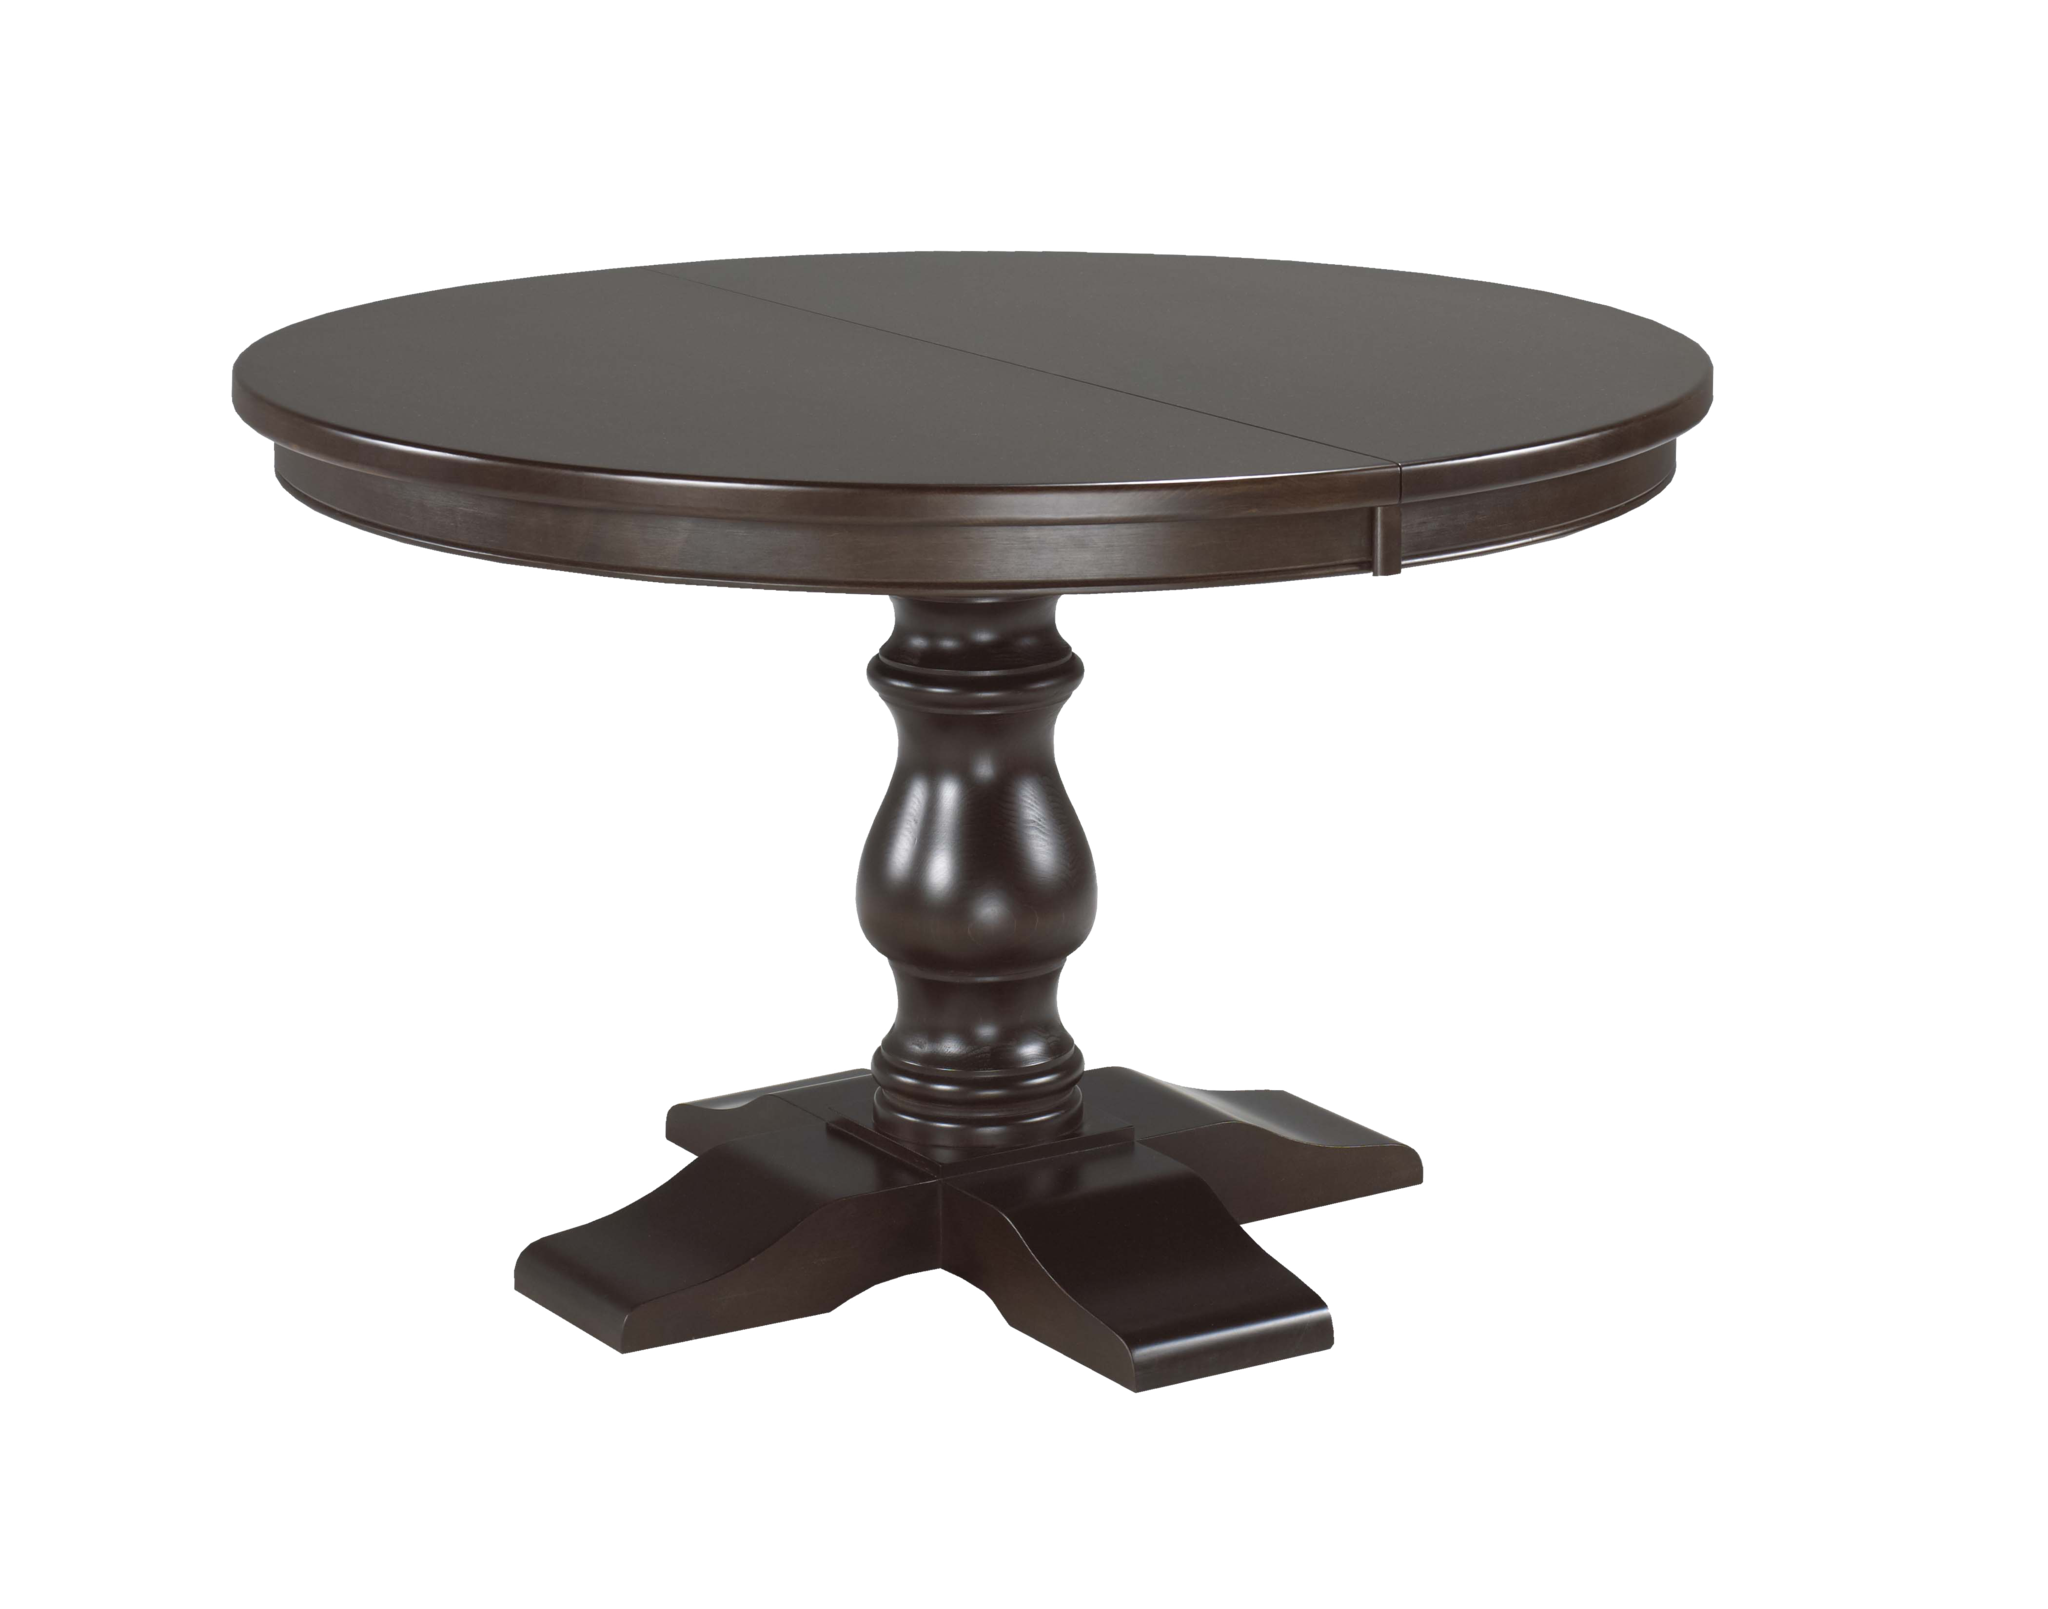 Savannah Table